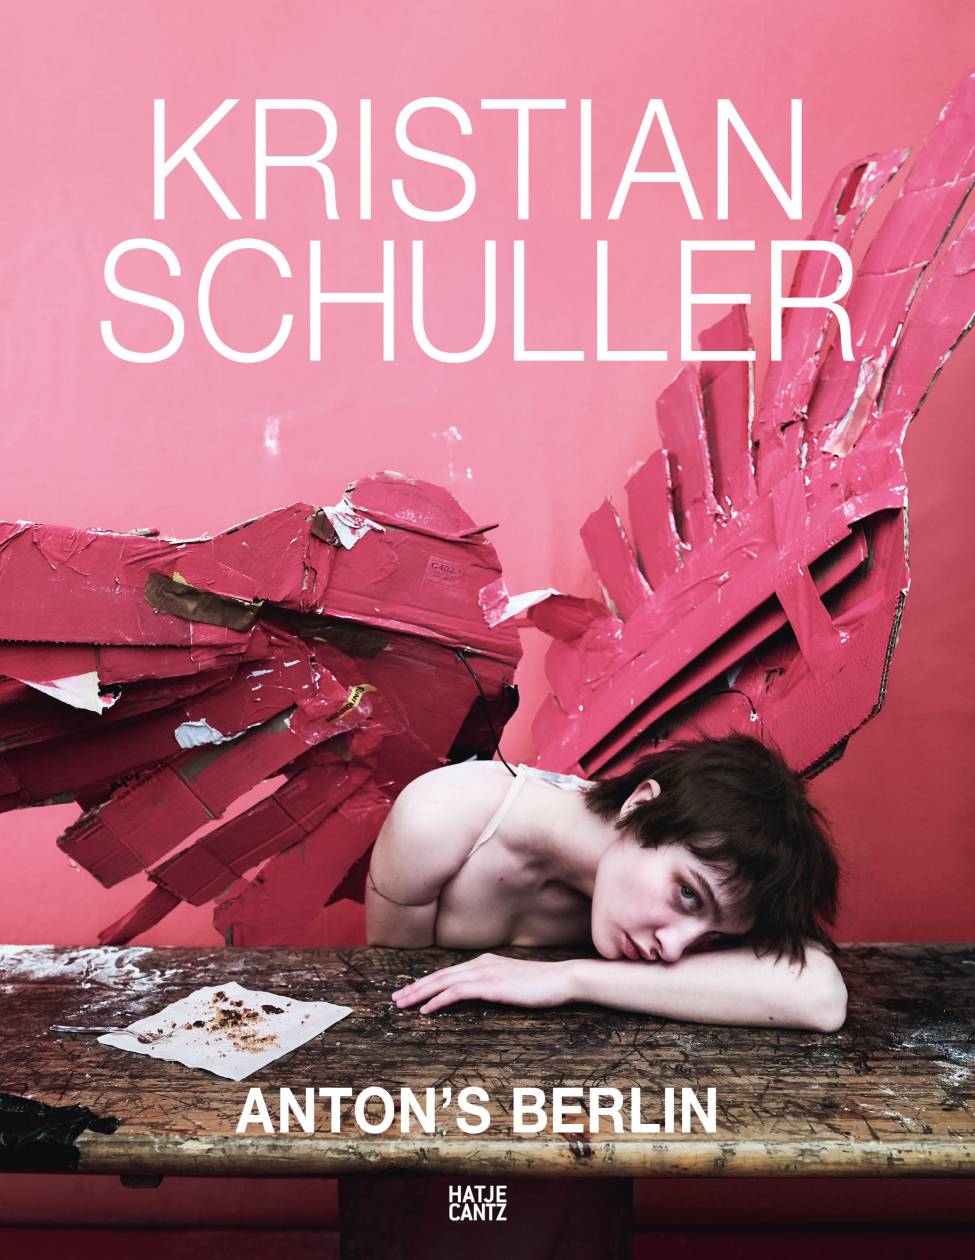 anton's berlin cover.jpg